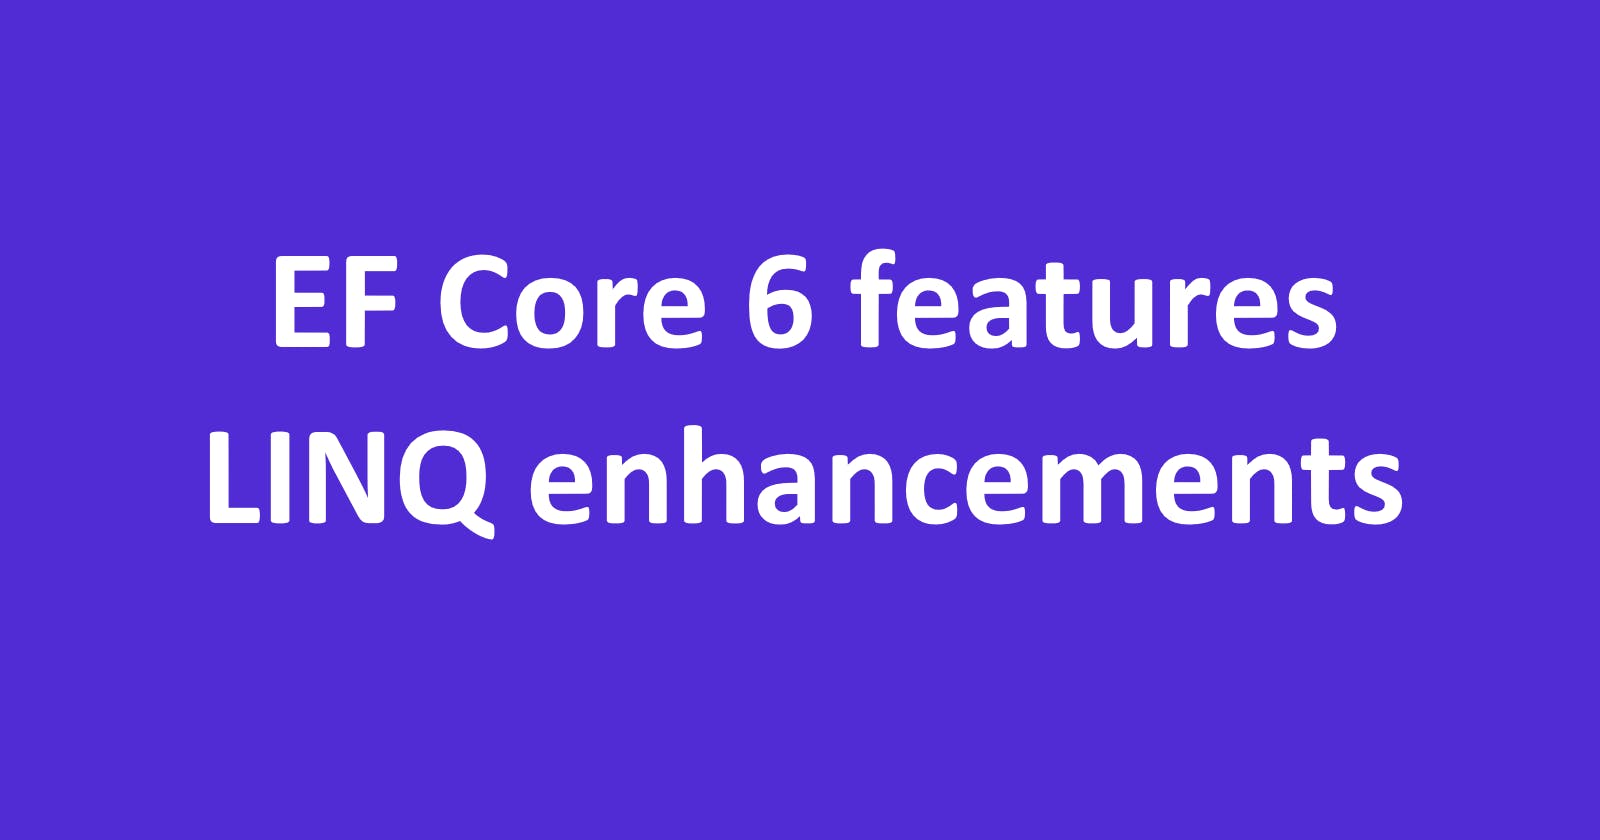 LINQ Enhancements in Entity Framework Core 6